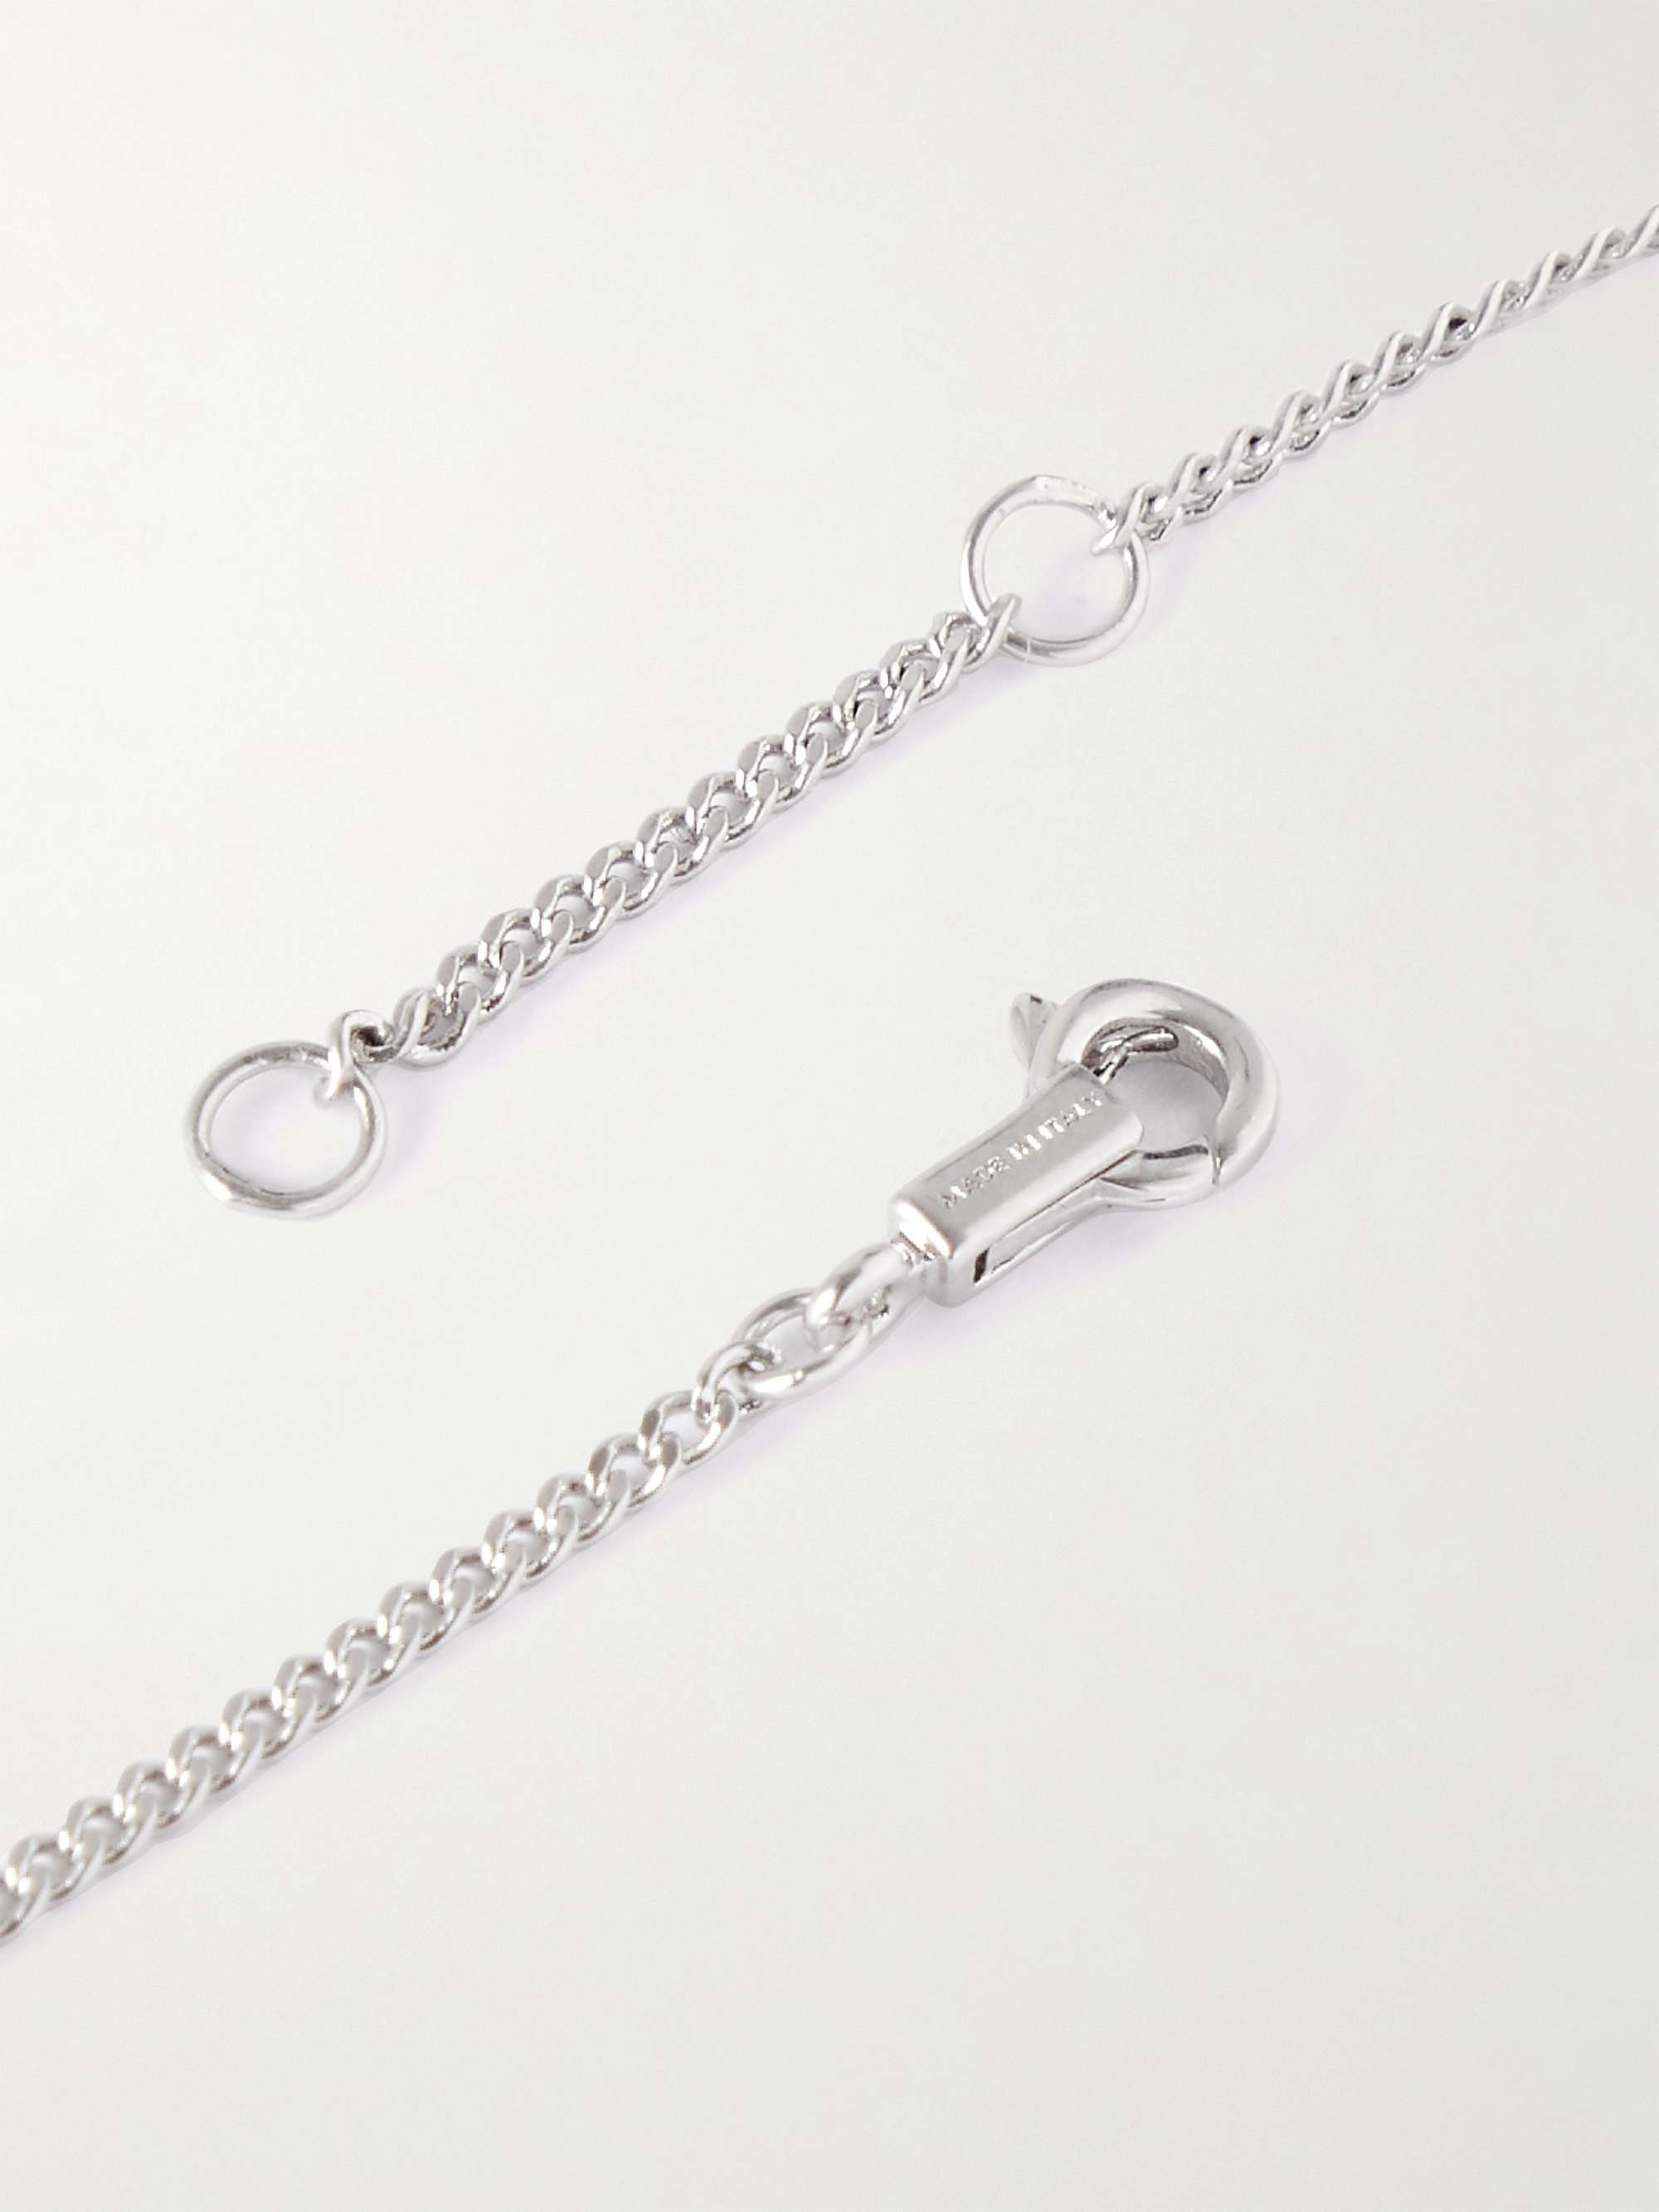 CELINE HOMME Silver-Tone Crystal Pendant Necklace